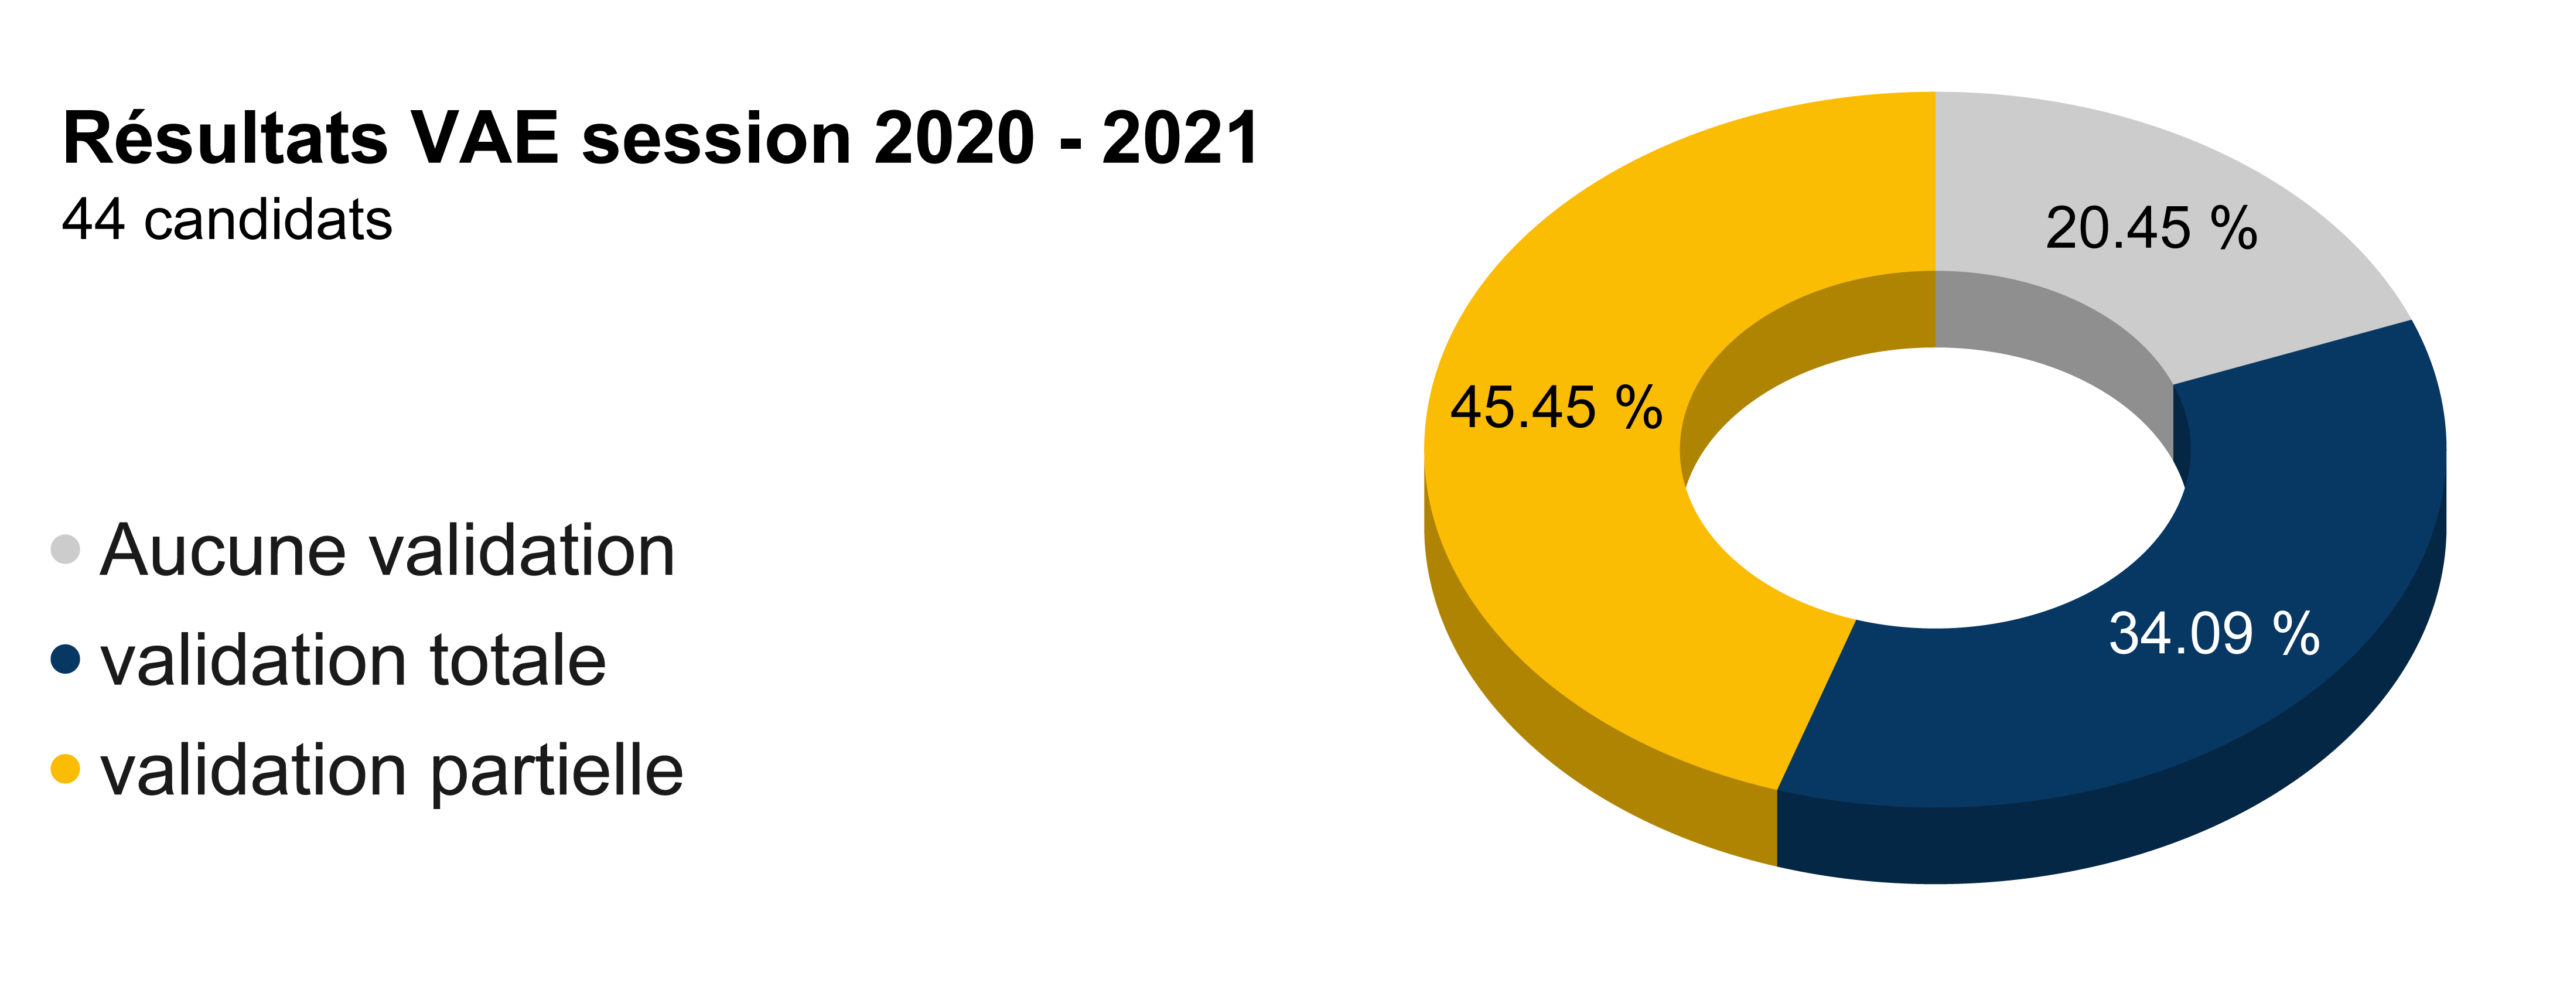 Resultats VAE session 2020 2021 scaled